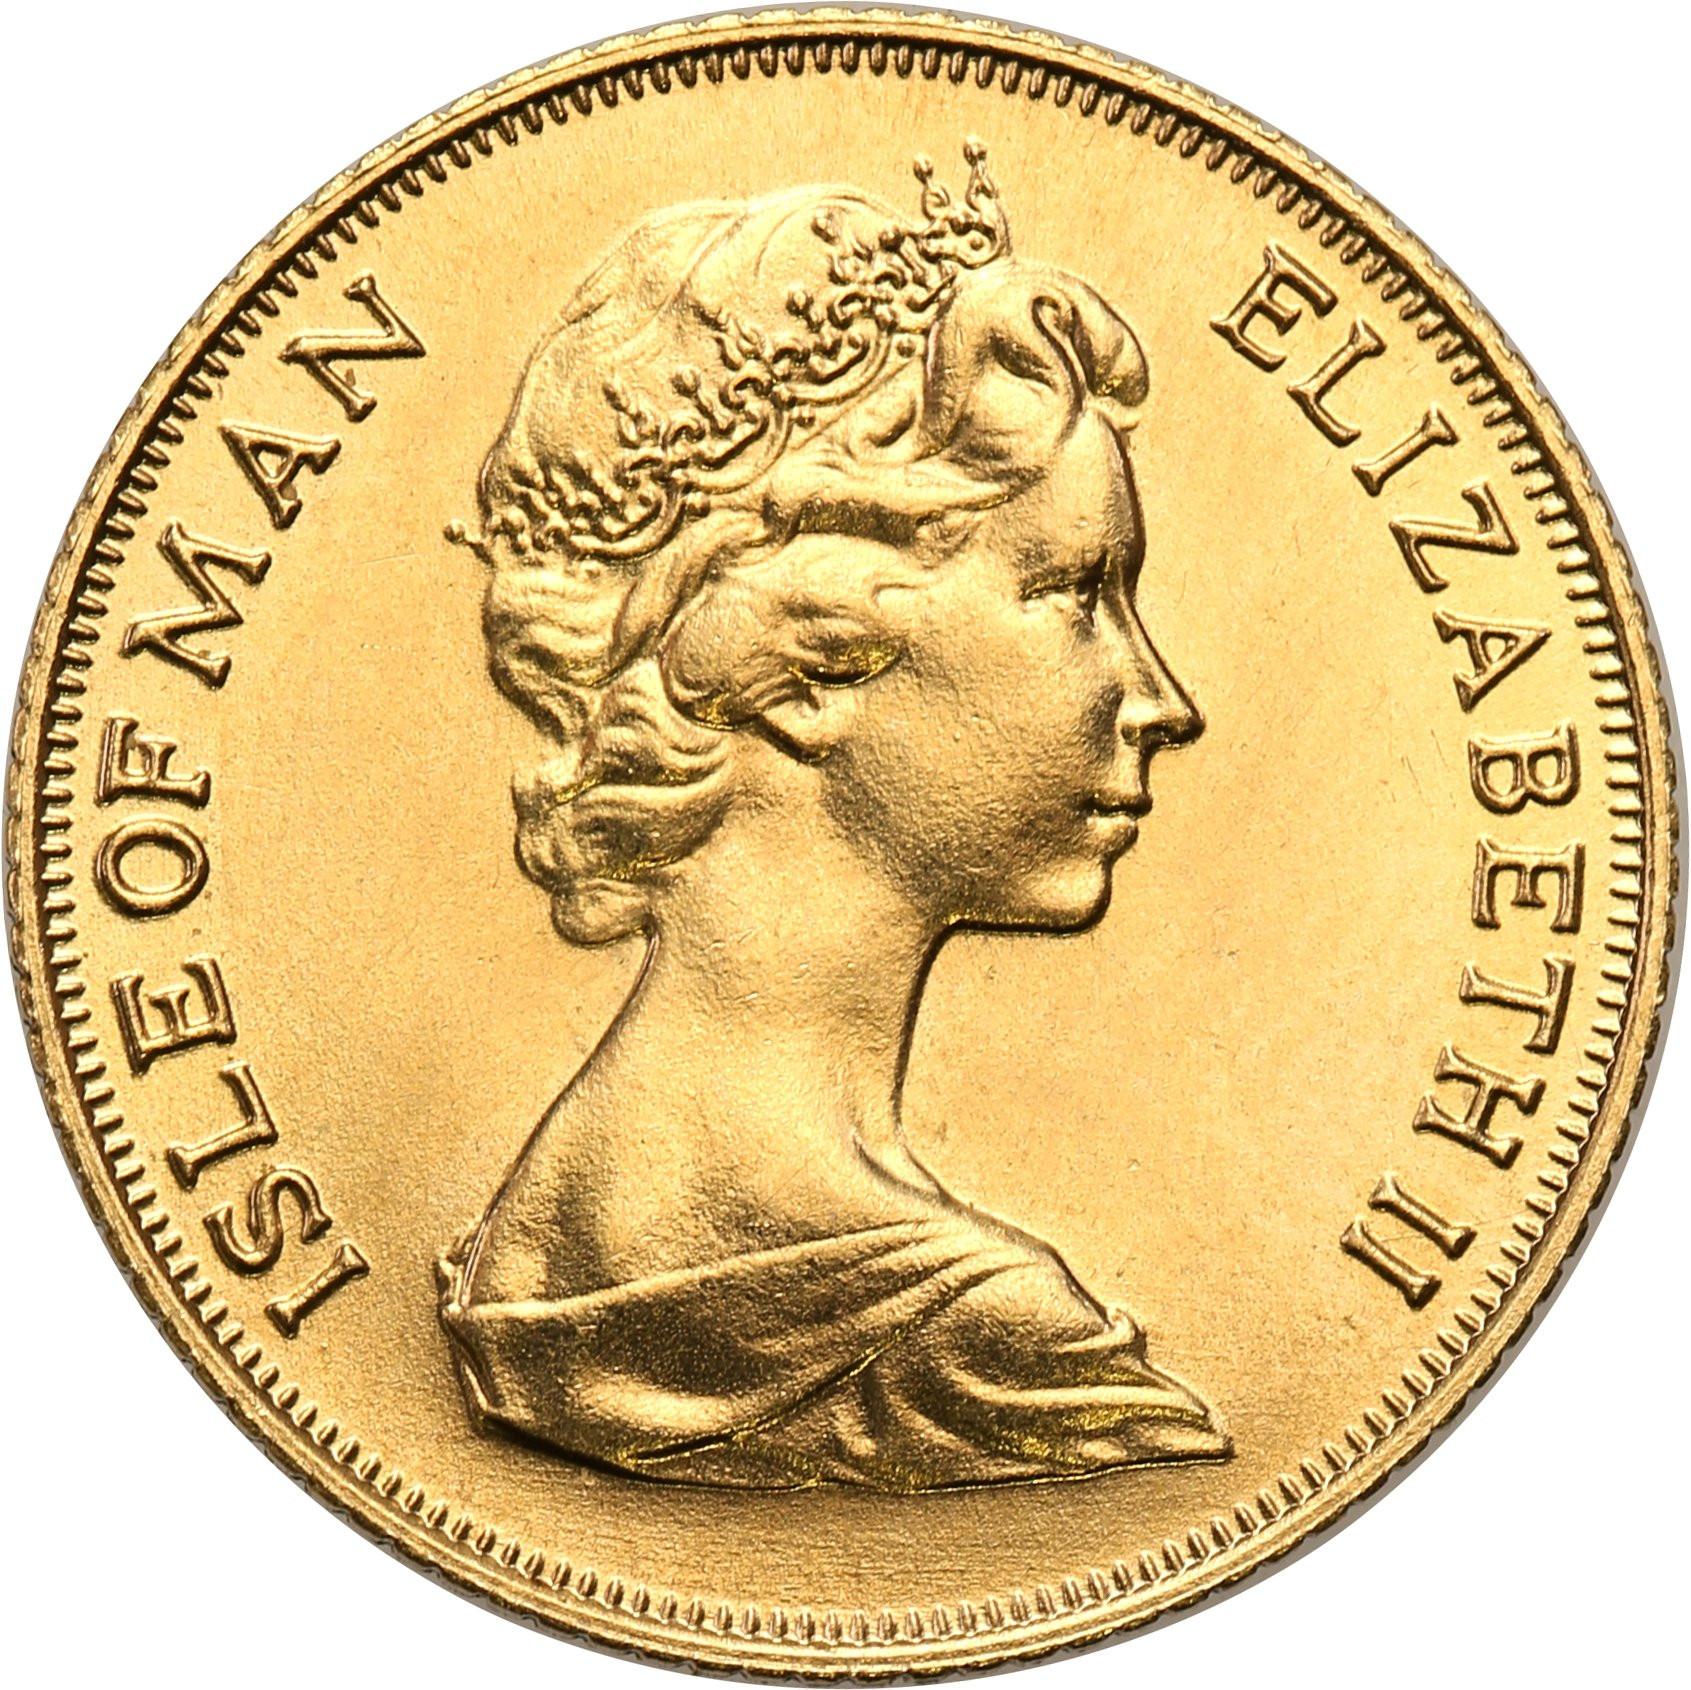 Isle of Man. Elżbieta II. 1/2 suwerena (funta) 1973 – Złoto